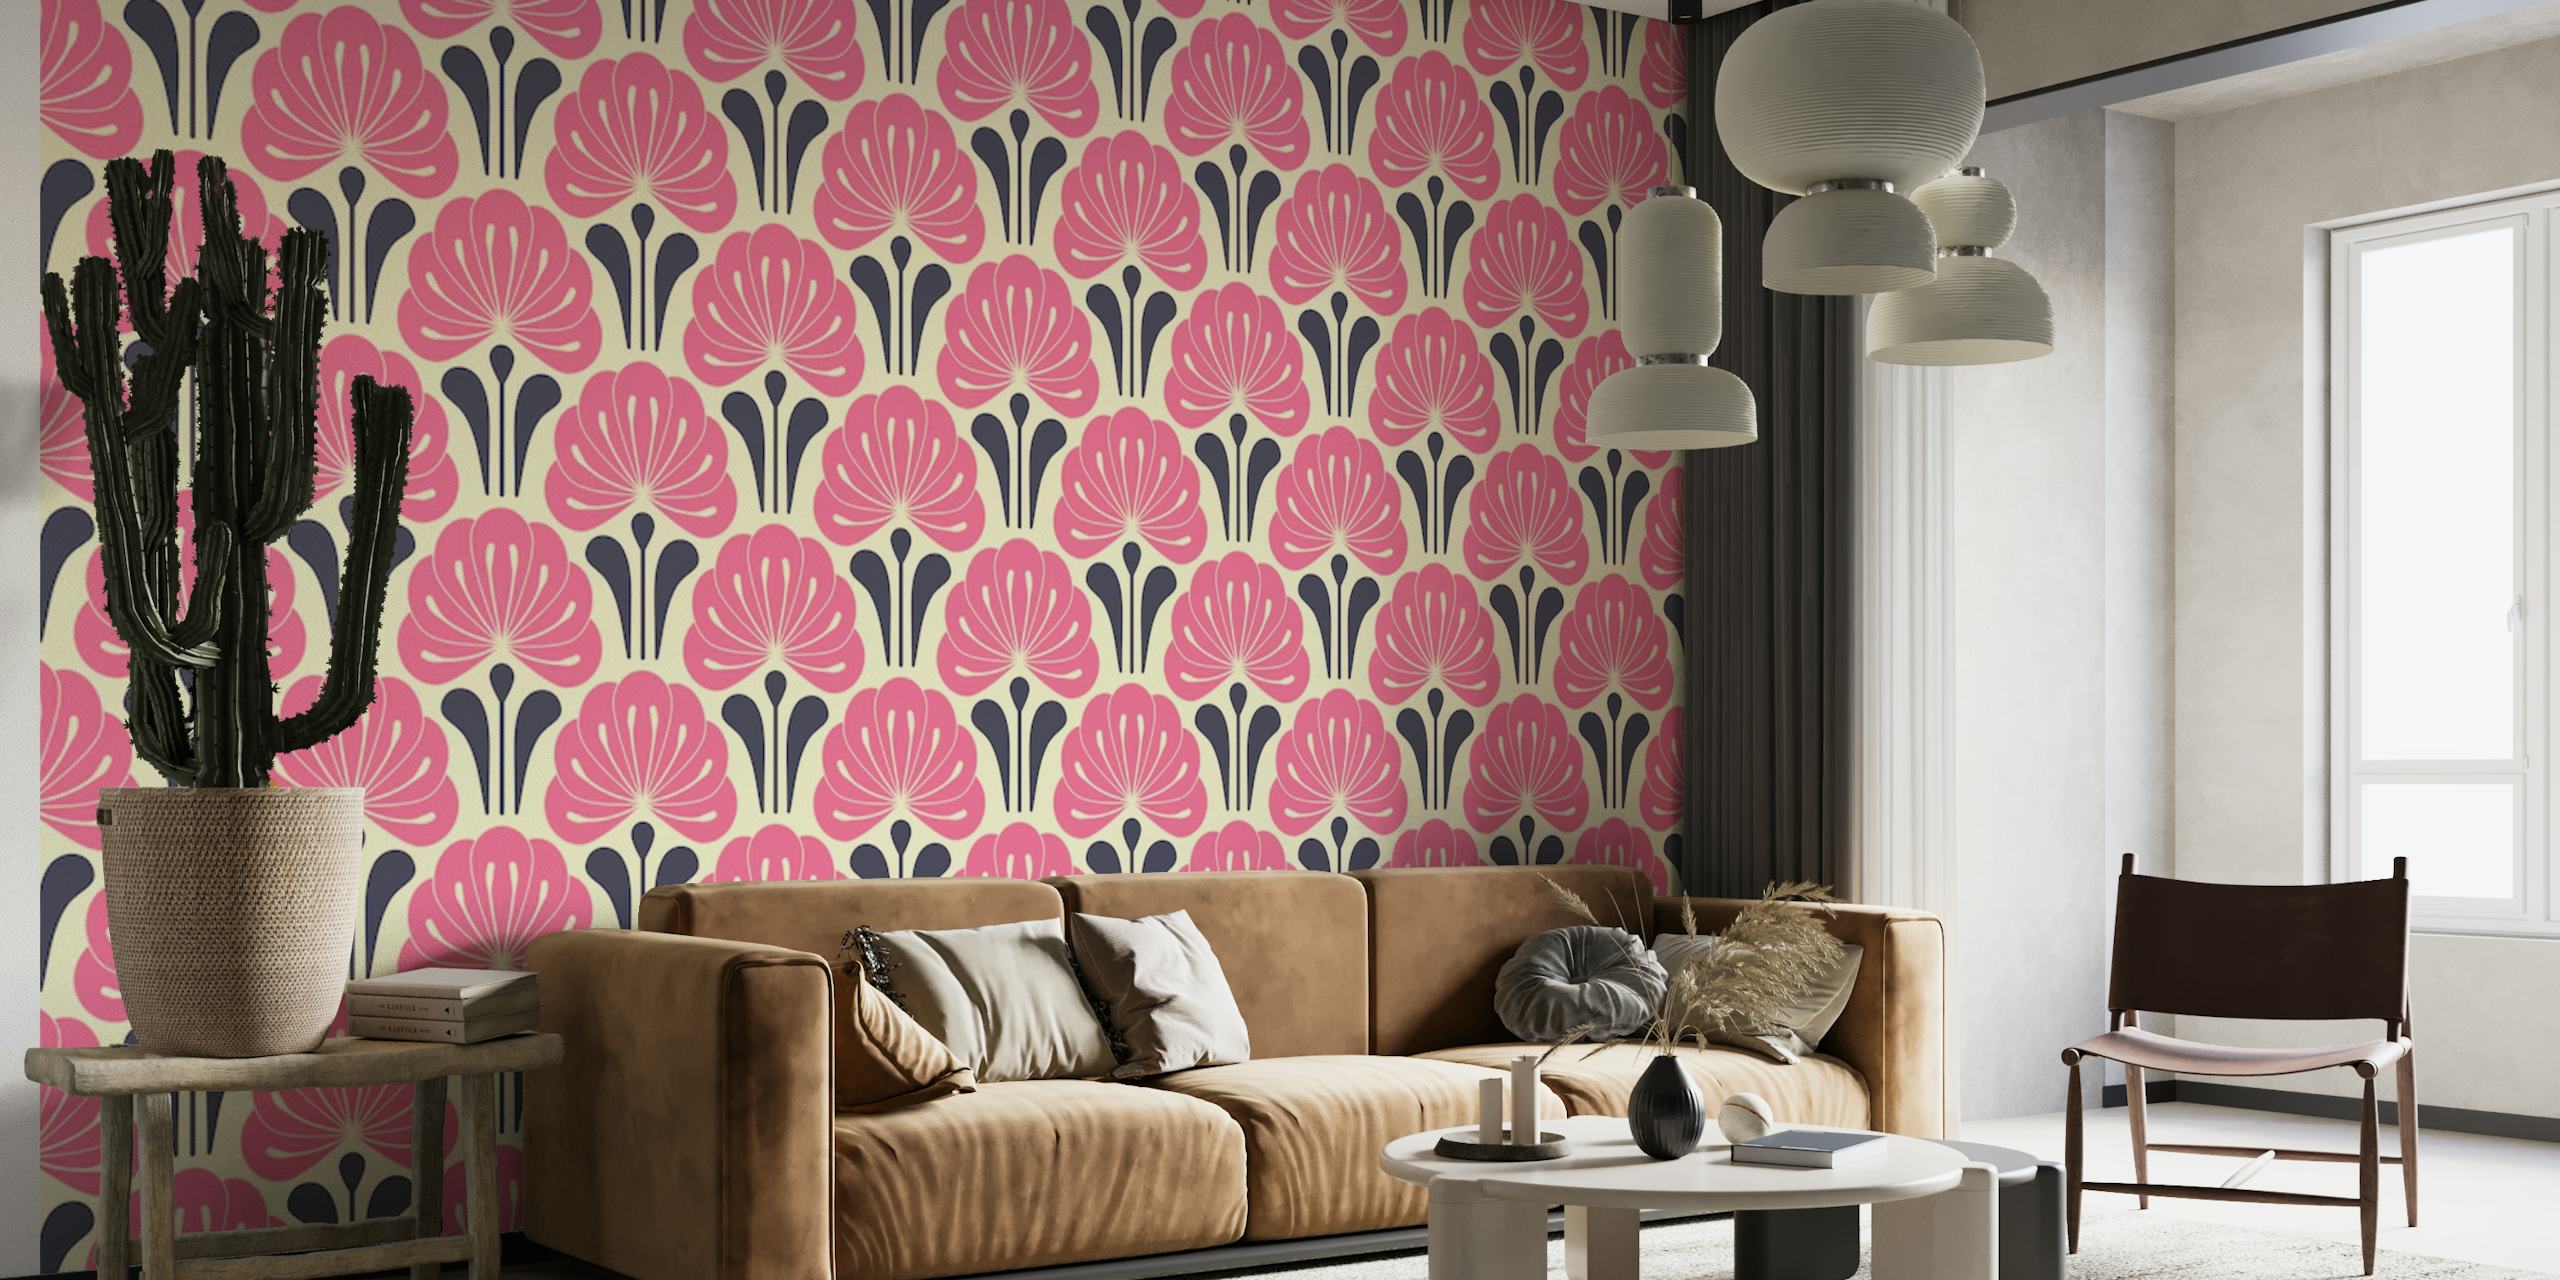 Artistic pink flowers pattern wall mural